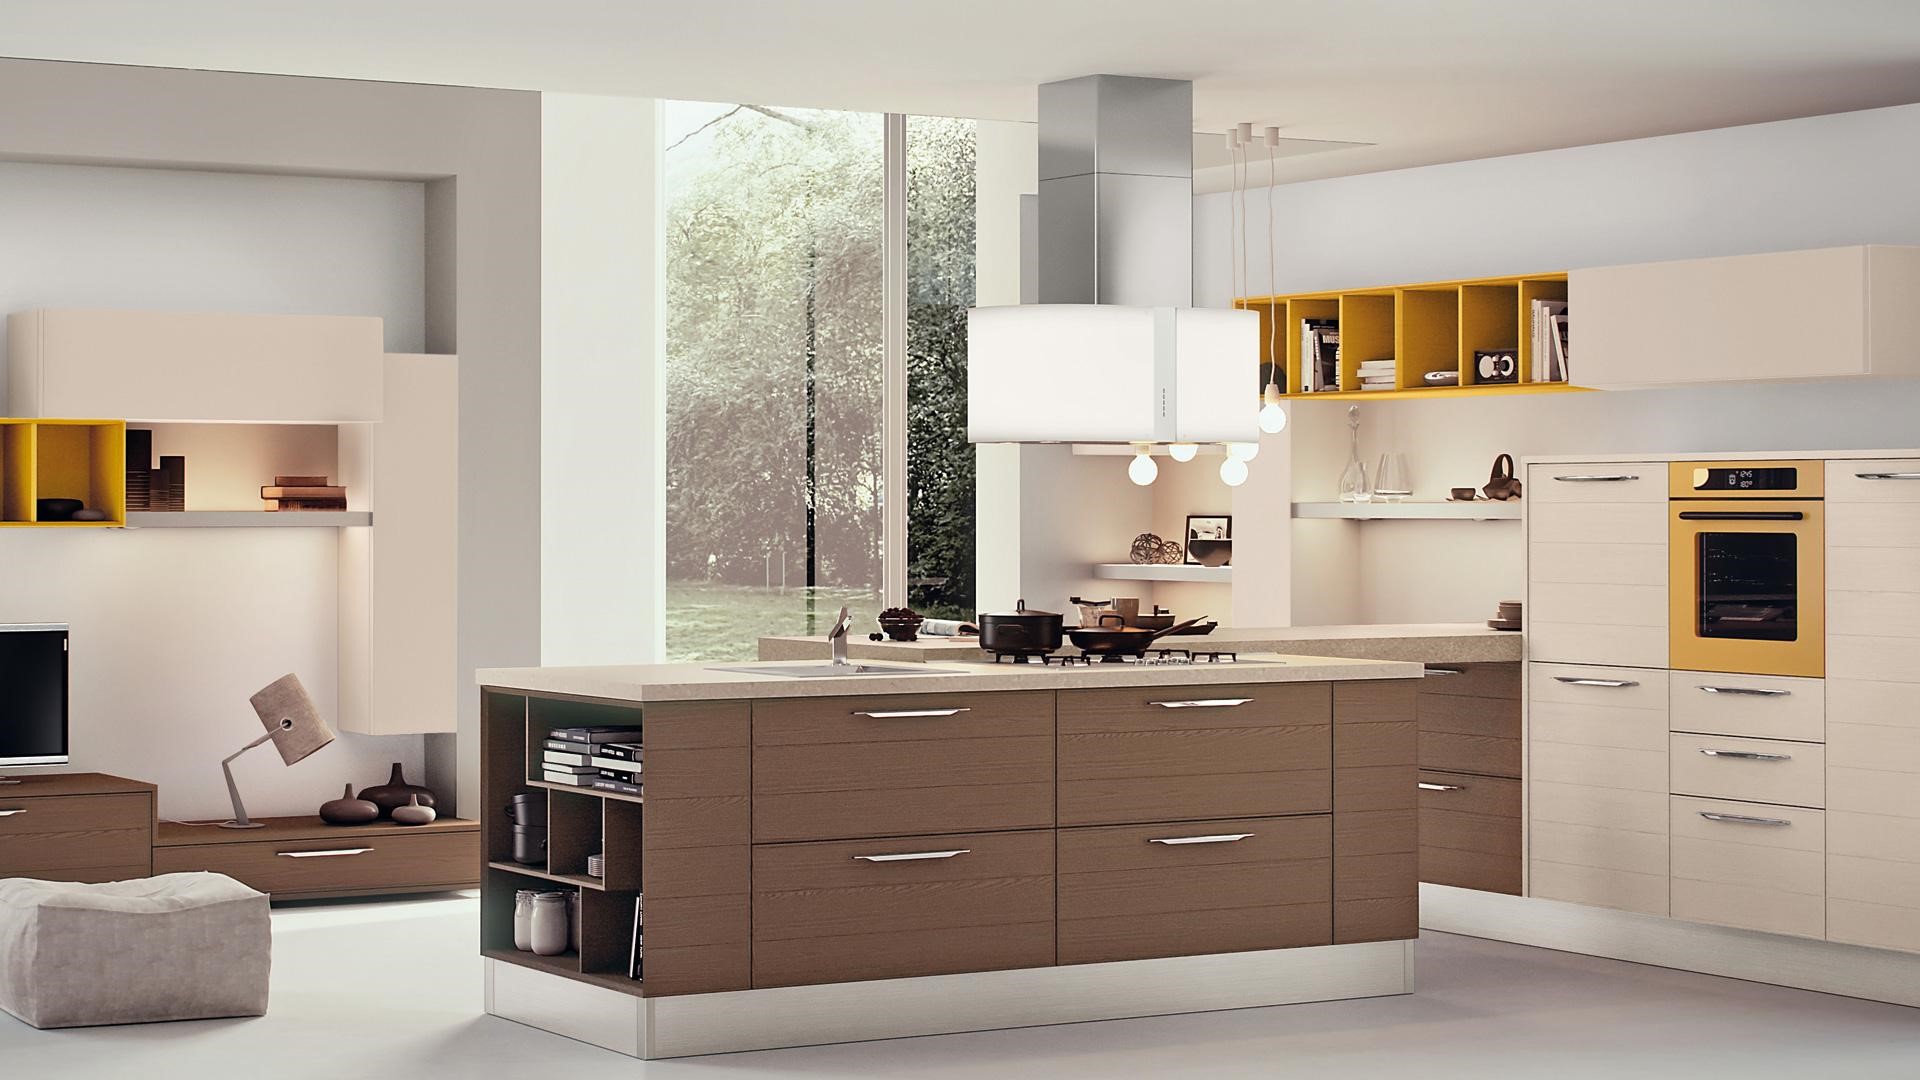 طراحی کابینت آشپزخانه جدید | طراحی دکوراسیون منزل,دکوراسیون داخلی منزل,دکور منزل